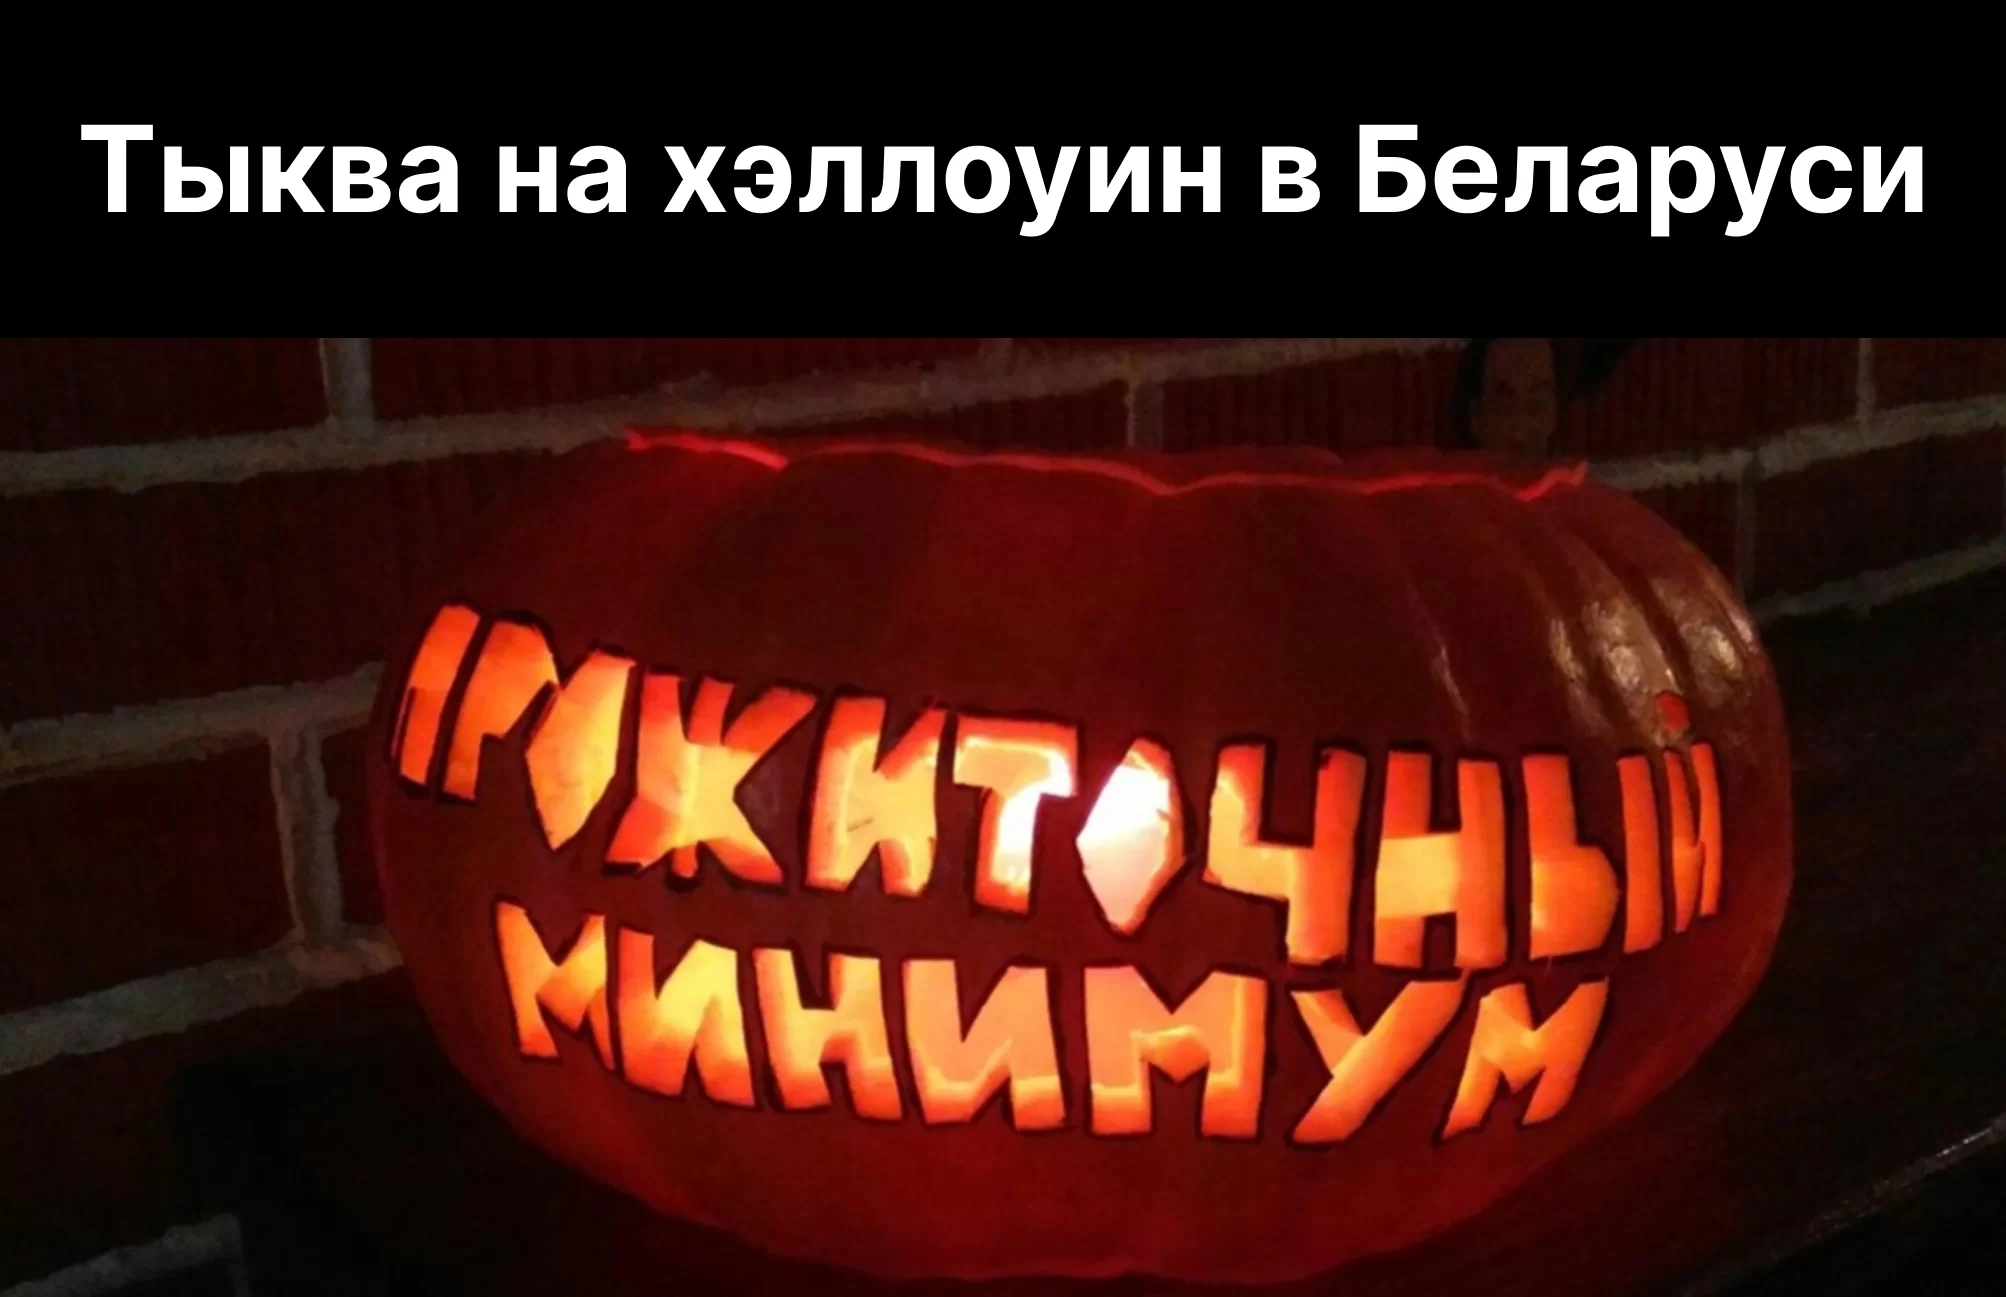 Хэллоуин в Беларуси